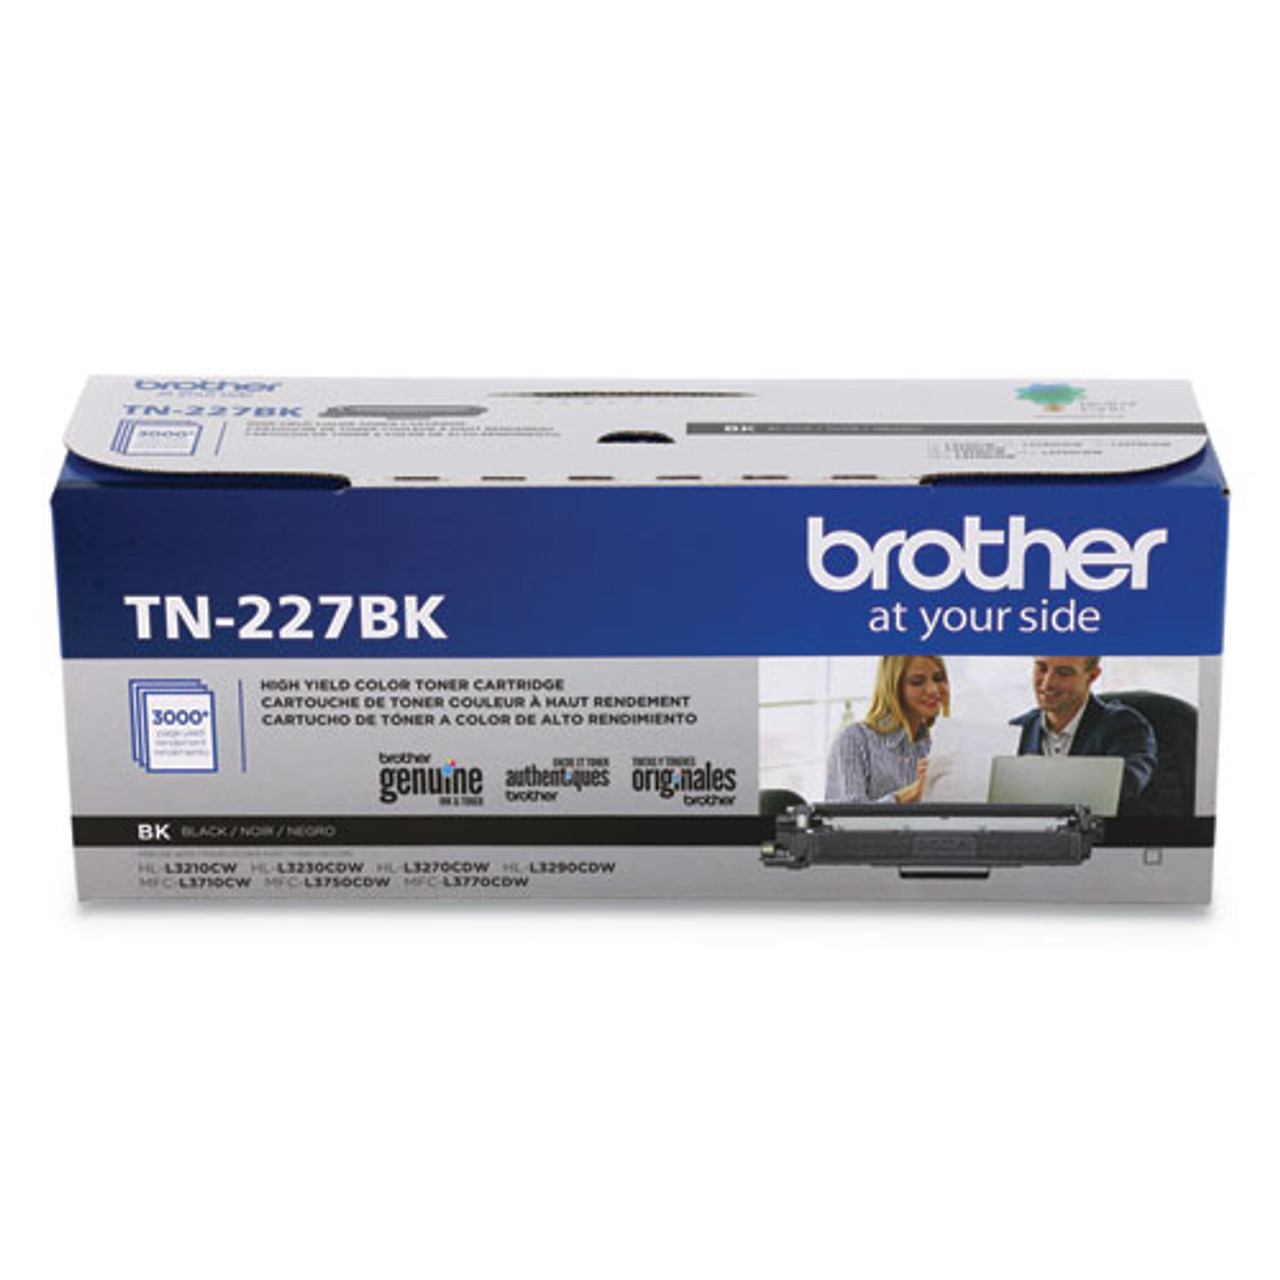 Brother MFC-L3710CW Toner Cartridges